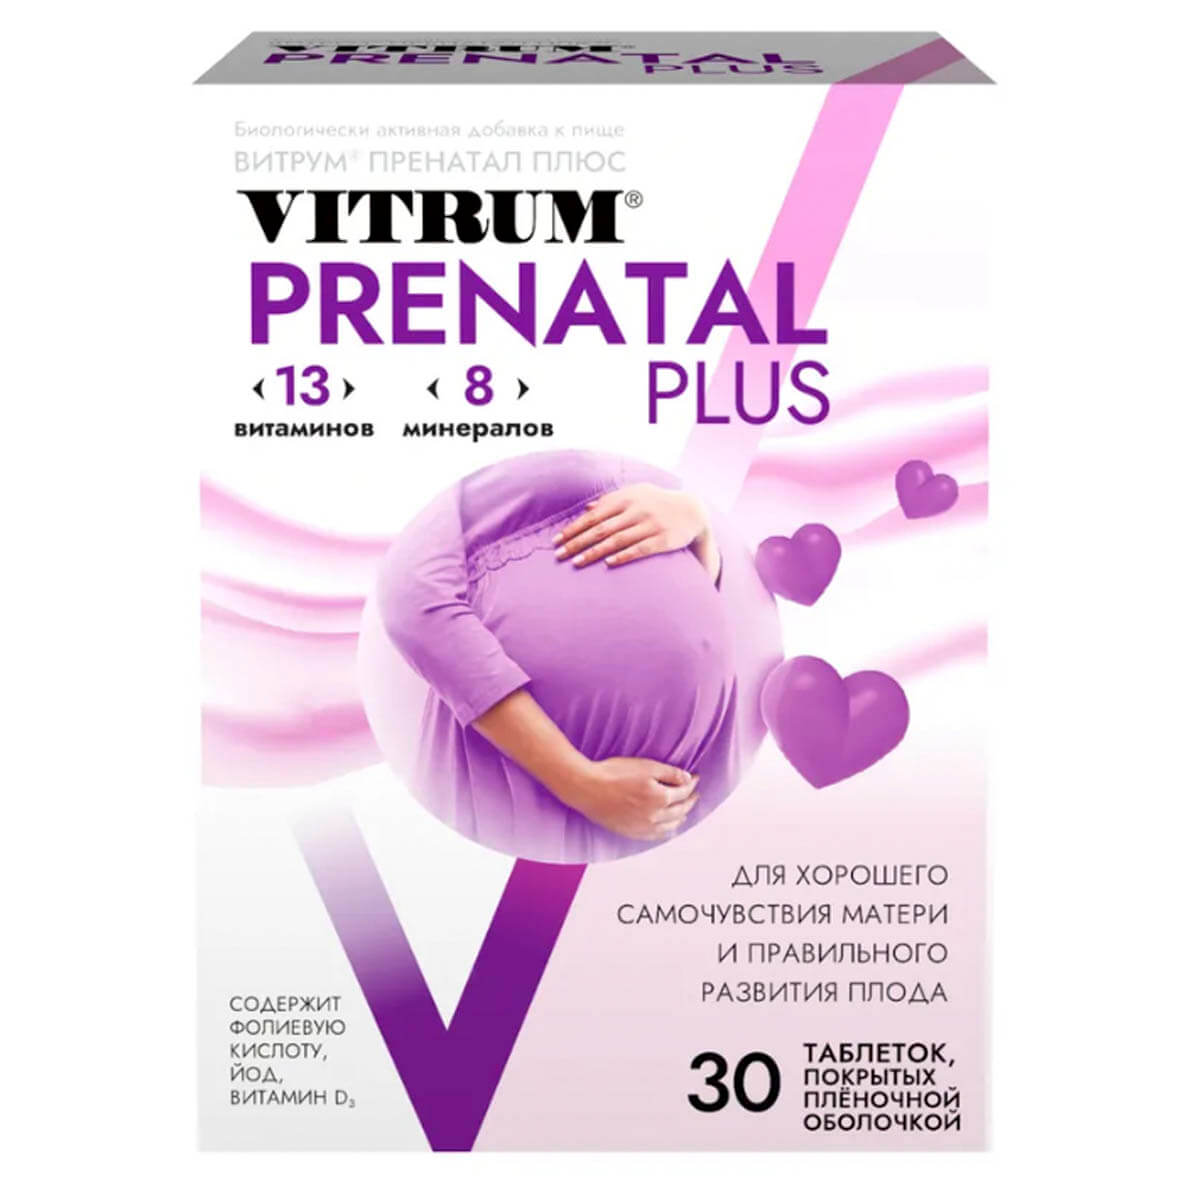 Купить Комплекс витаминов Prenatal Plus для беременных, 30 таблеток, Vitrum, Витрум